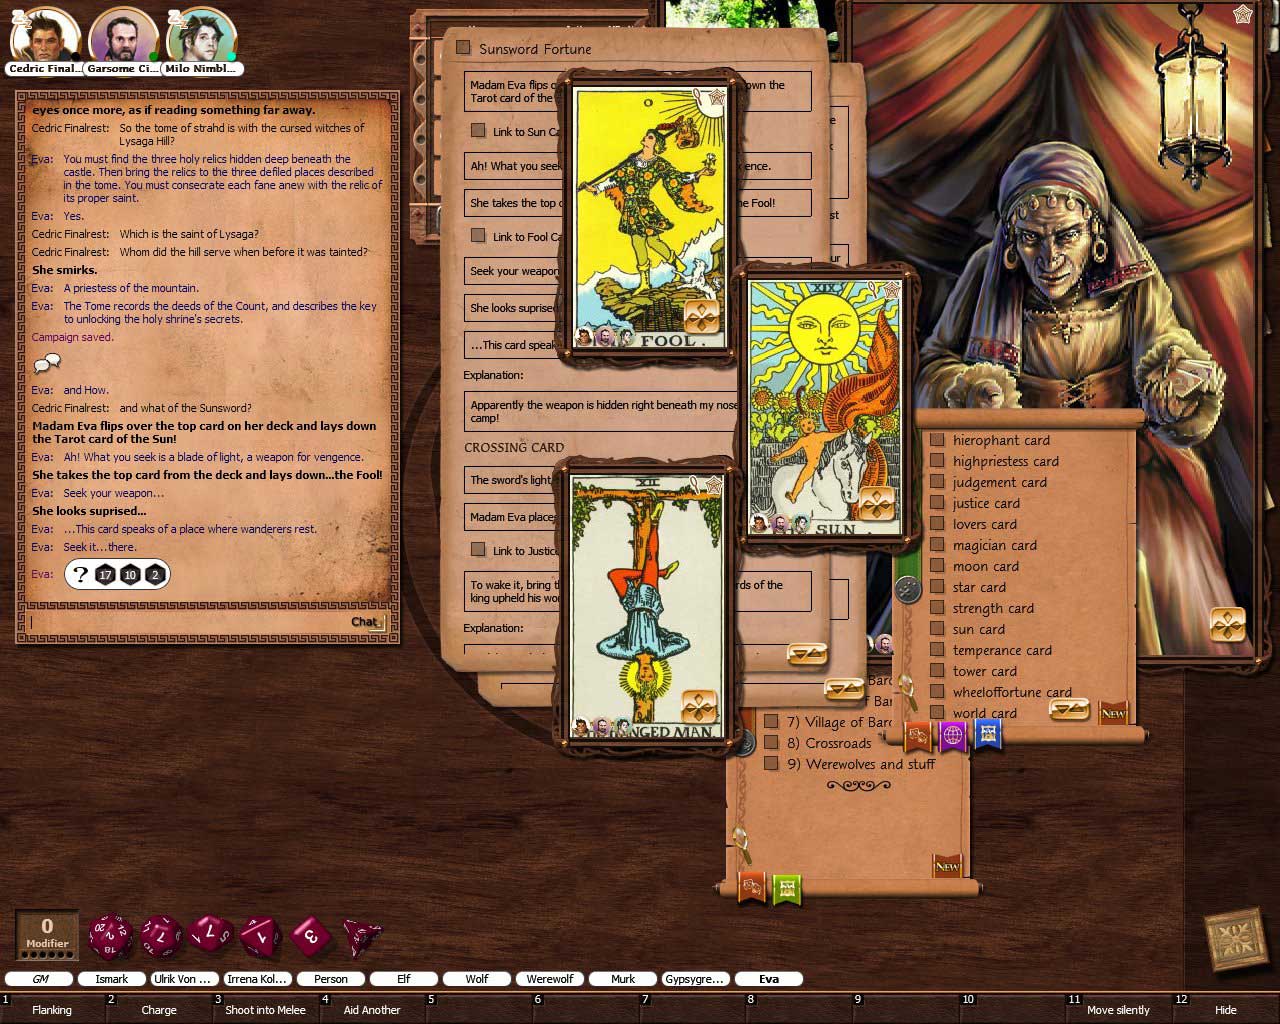 http://www.fantasygrounds.com/images/screenshots/fg2-screenshot-02.jpg